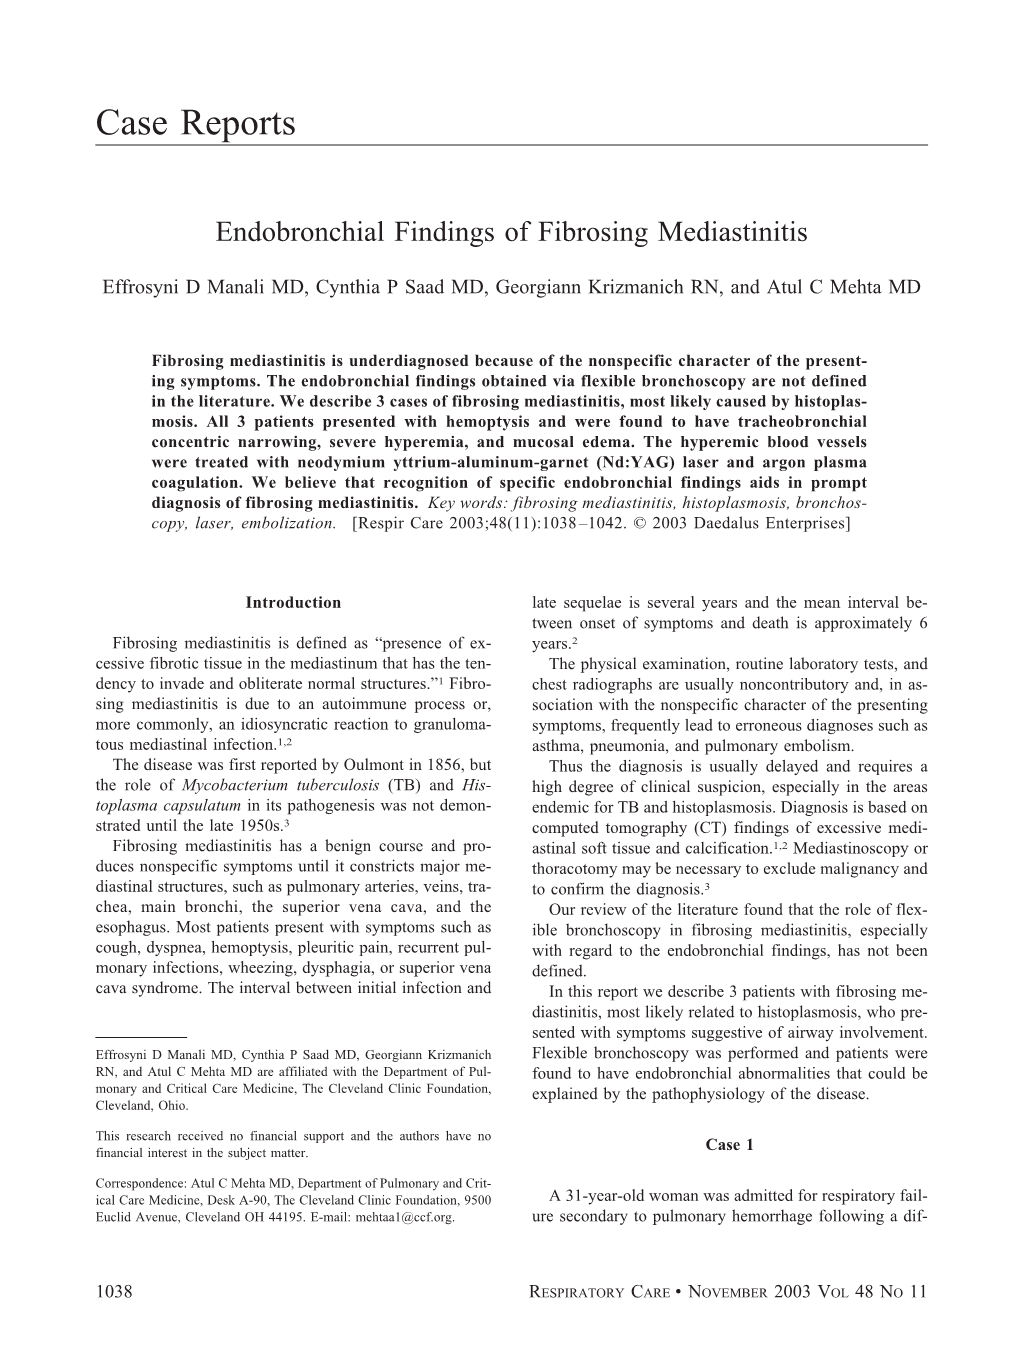 Endobronchial Findings of Fibrosing Mediastinitis